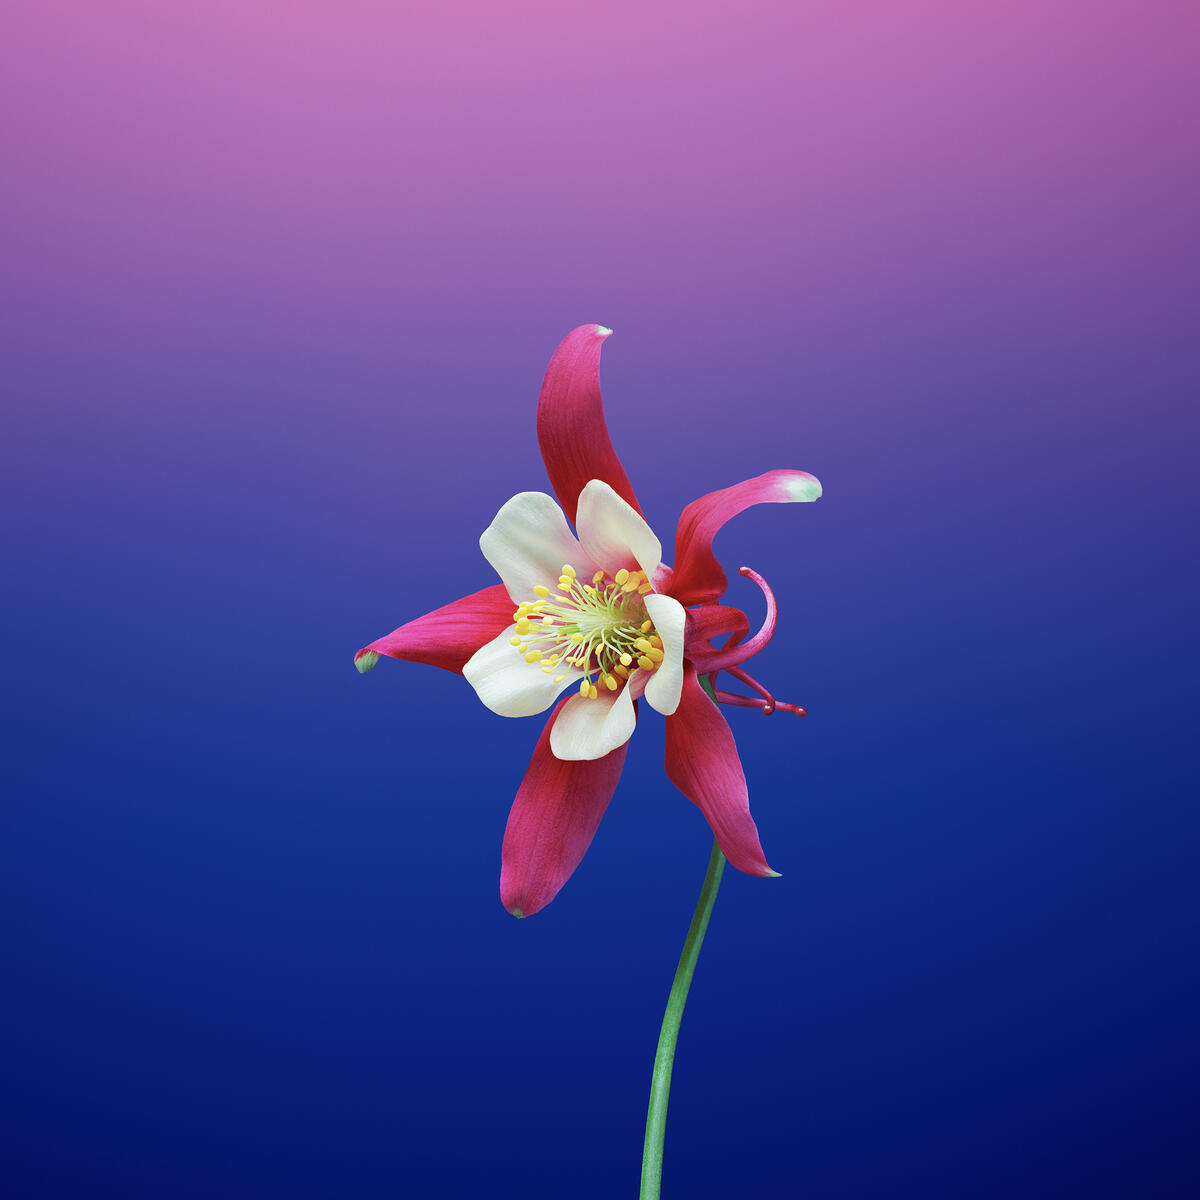 A flower on a plain blue background